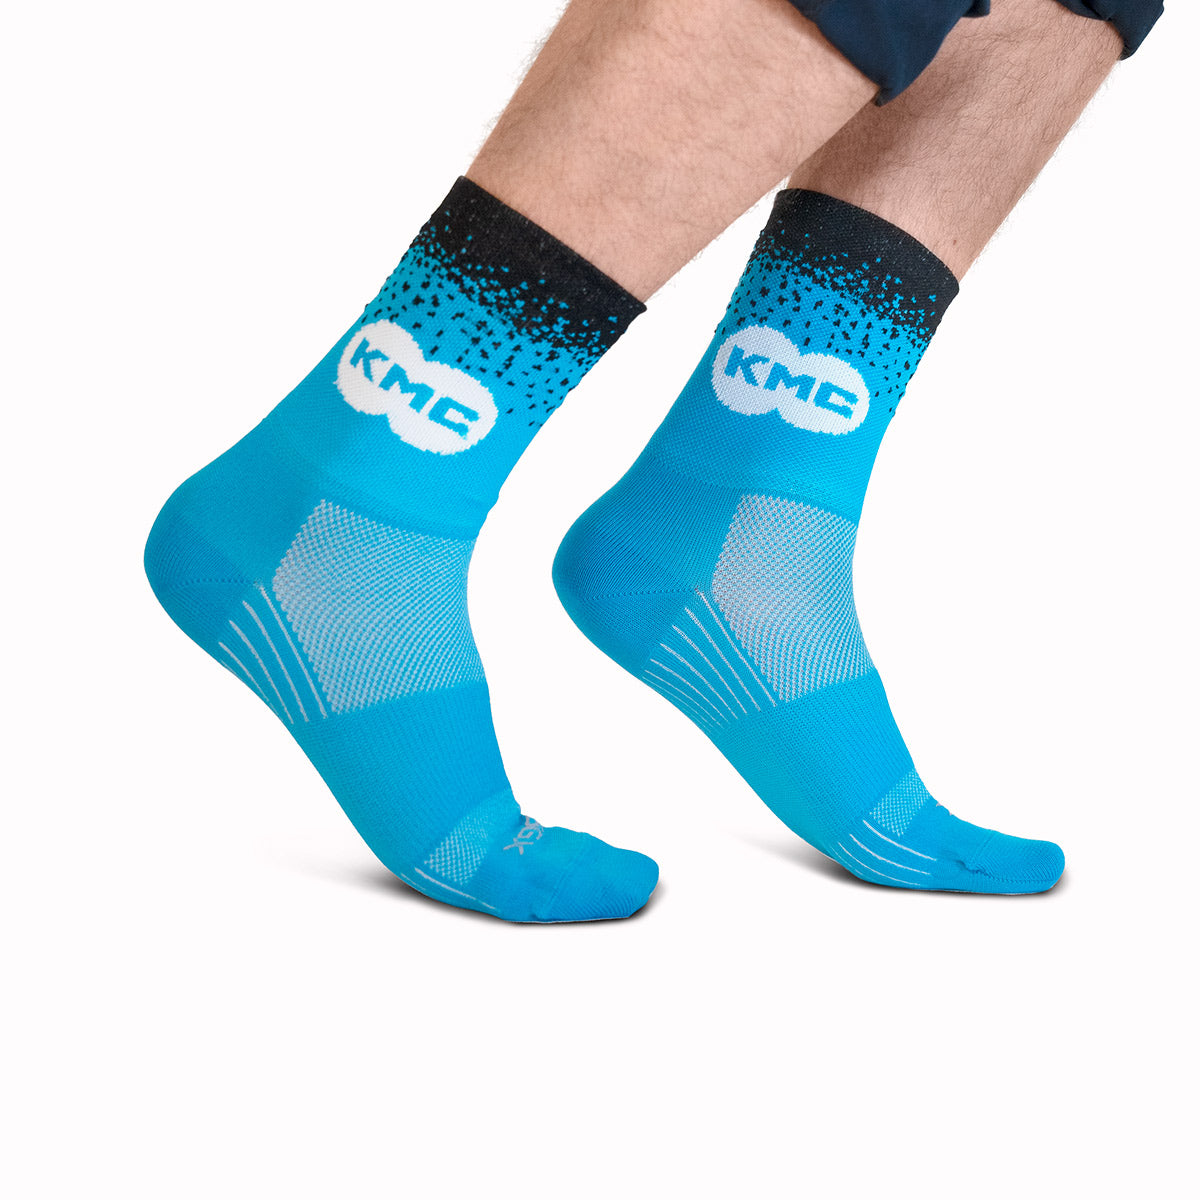 KMC Deep Blue Cycling Socks